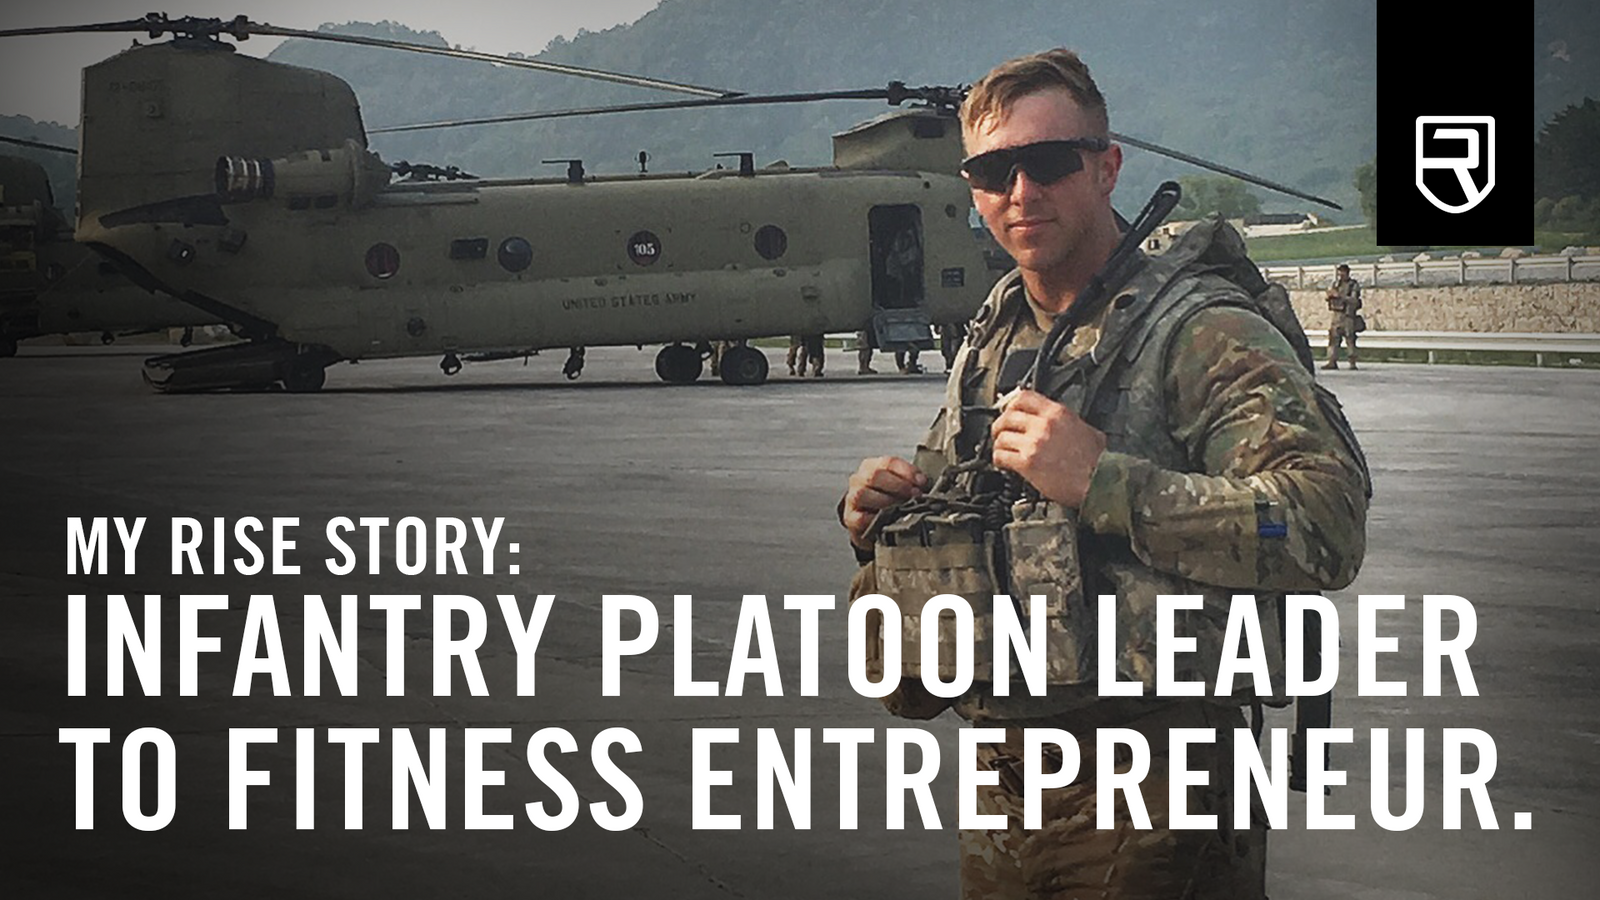 Nick Bare: From Infantry Platoon Leader to Fitness Entrepreneur